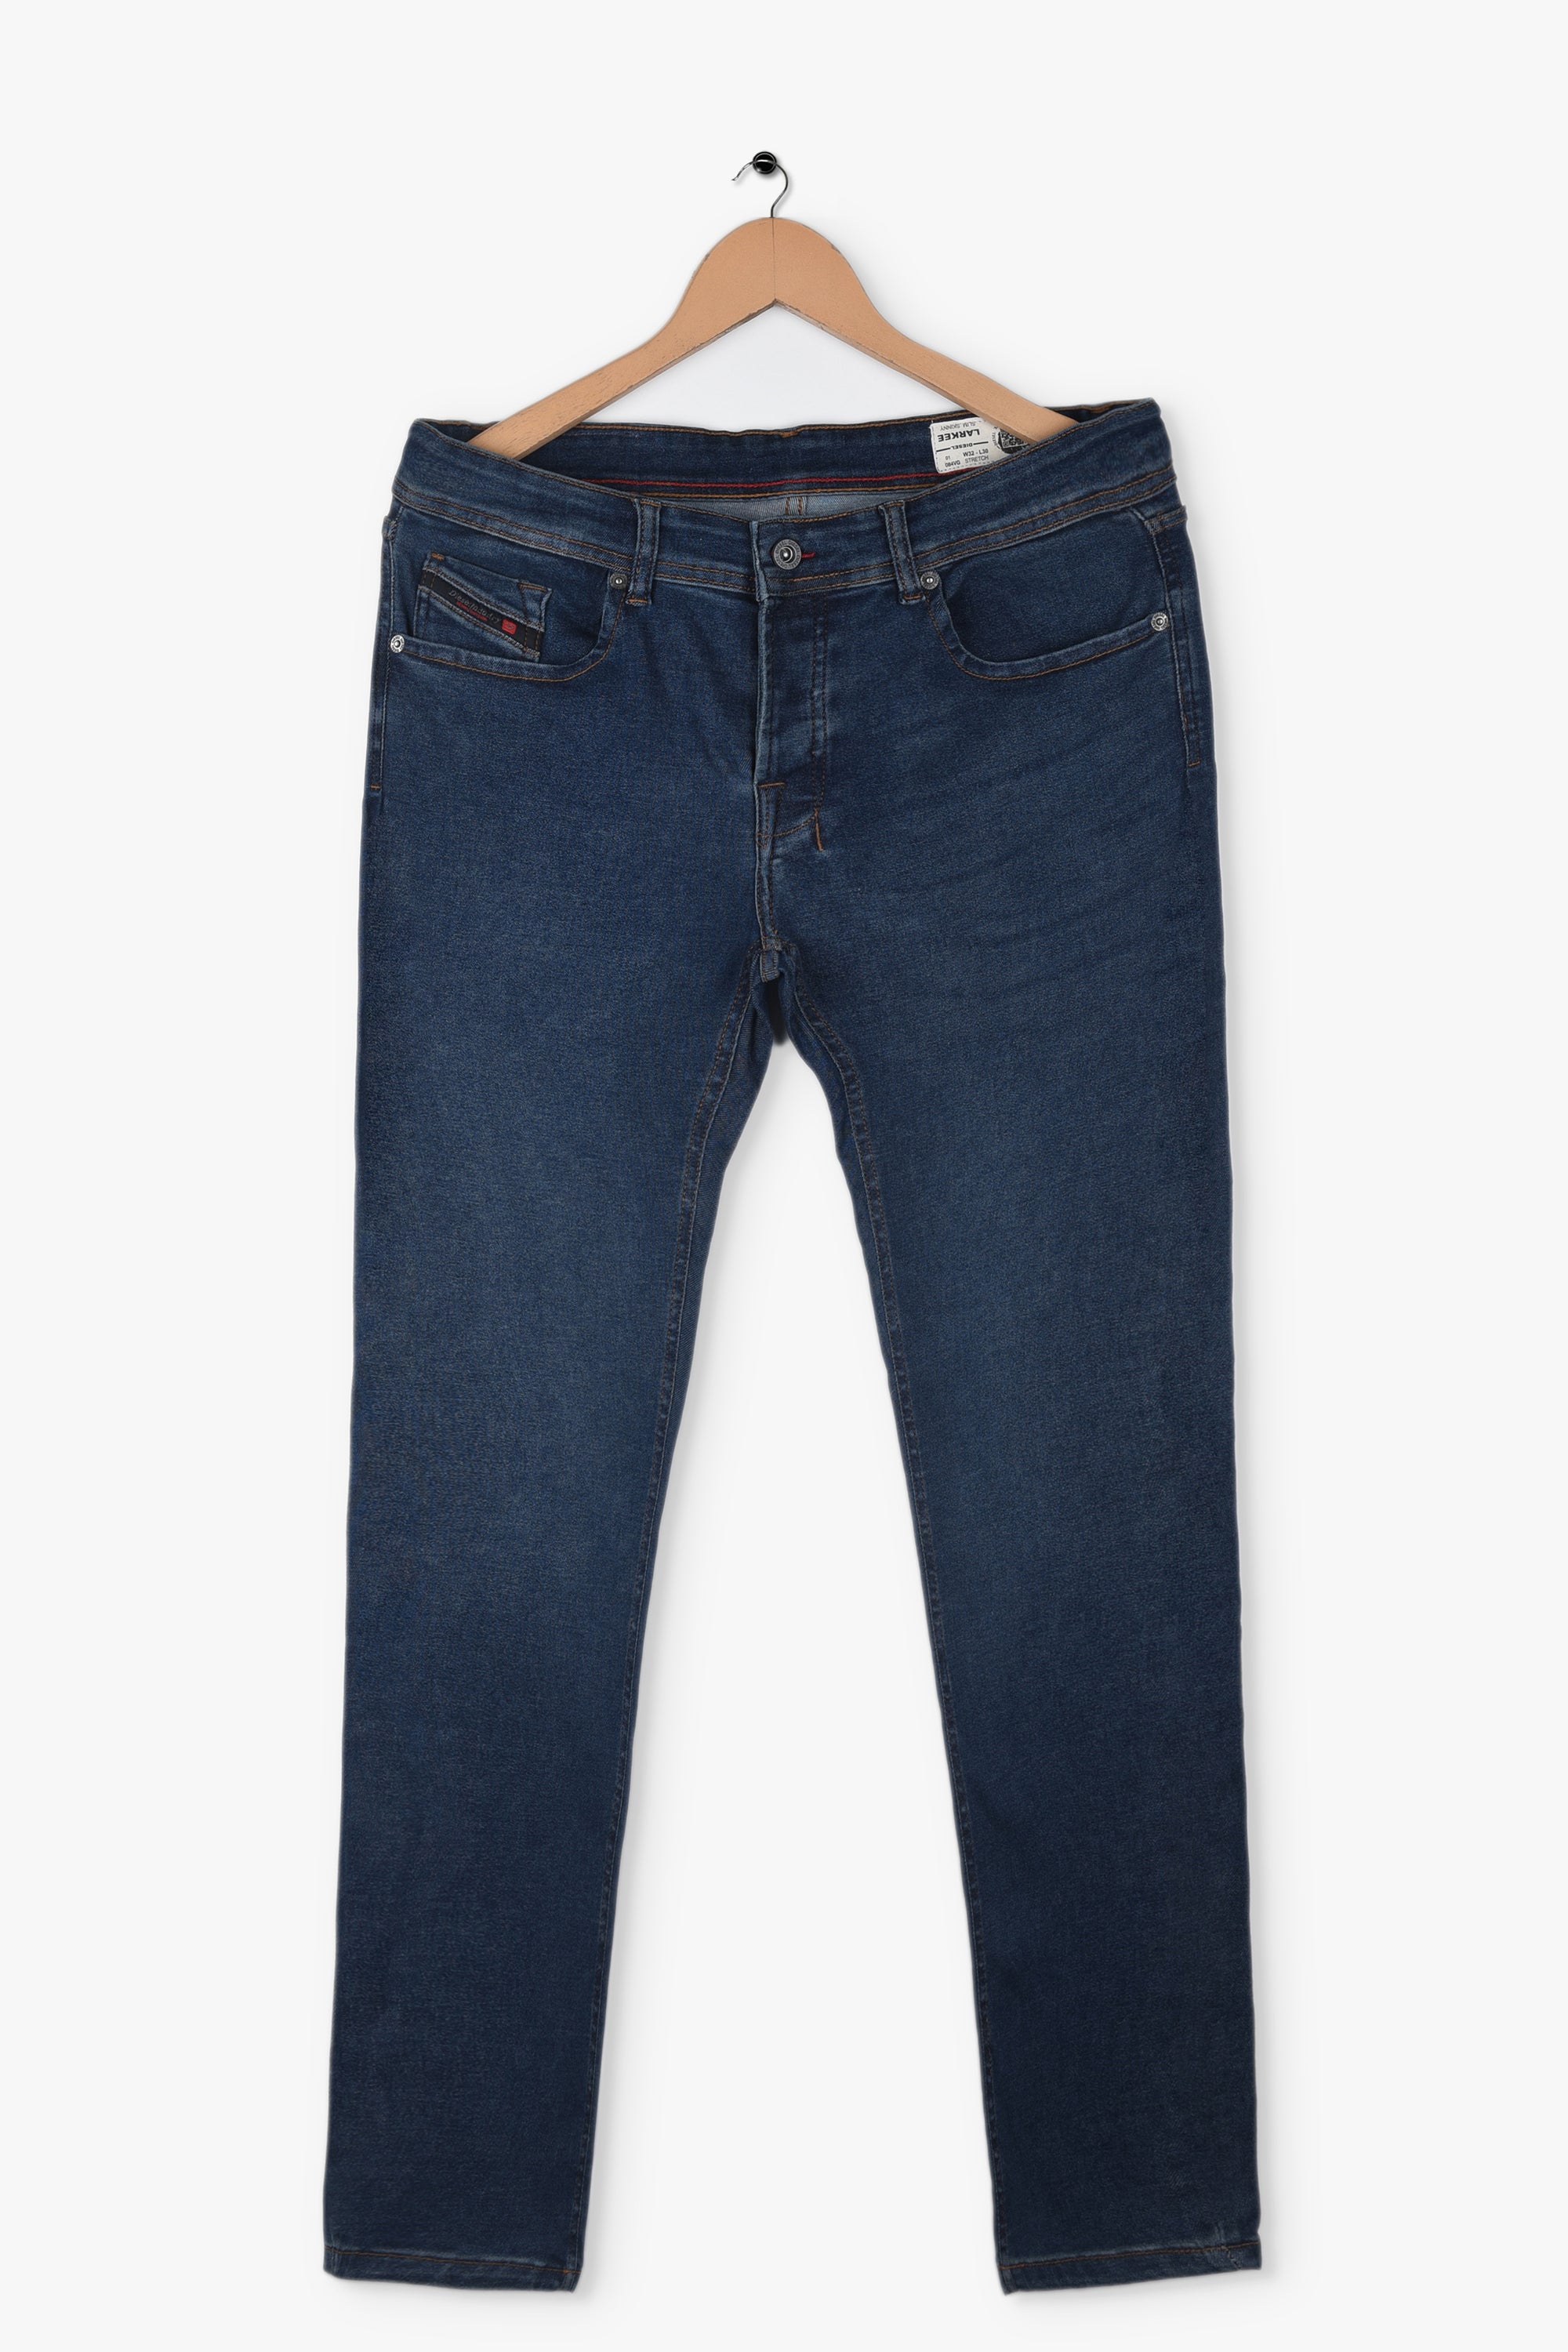 taylor Slim Jeans